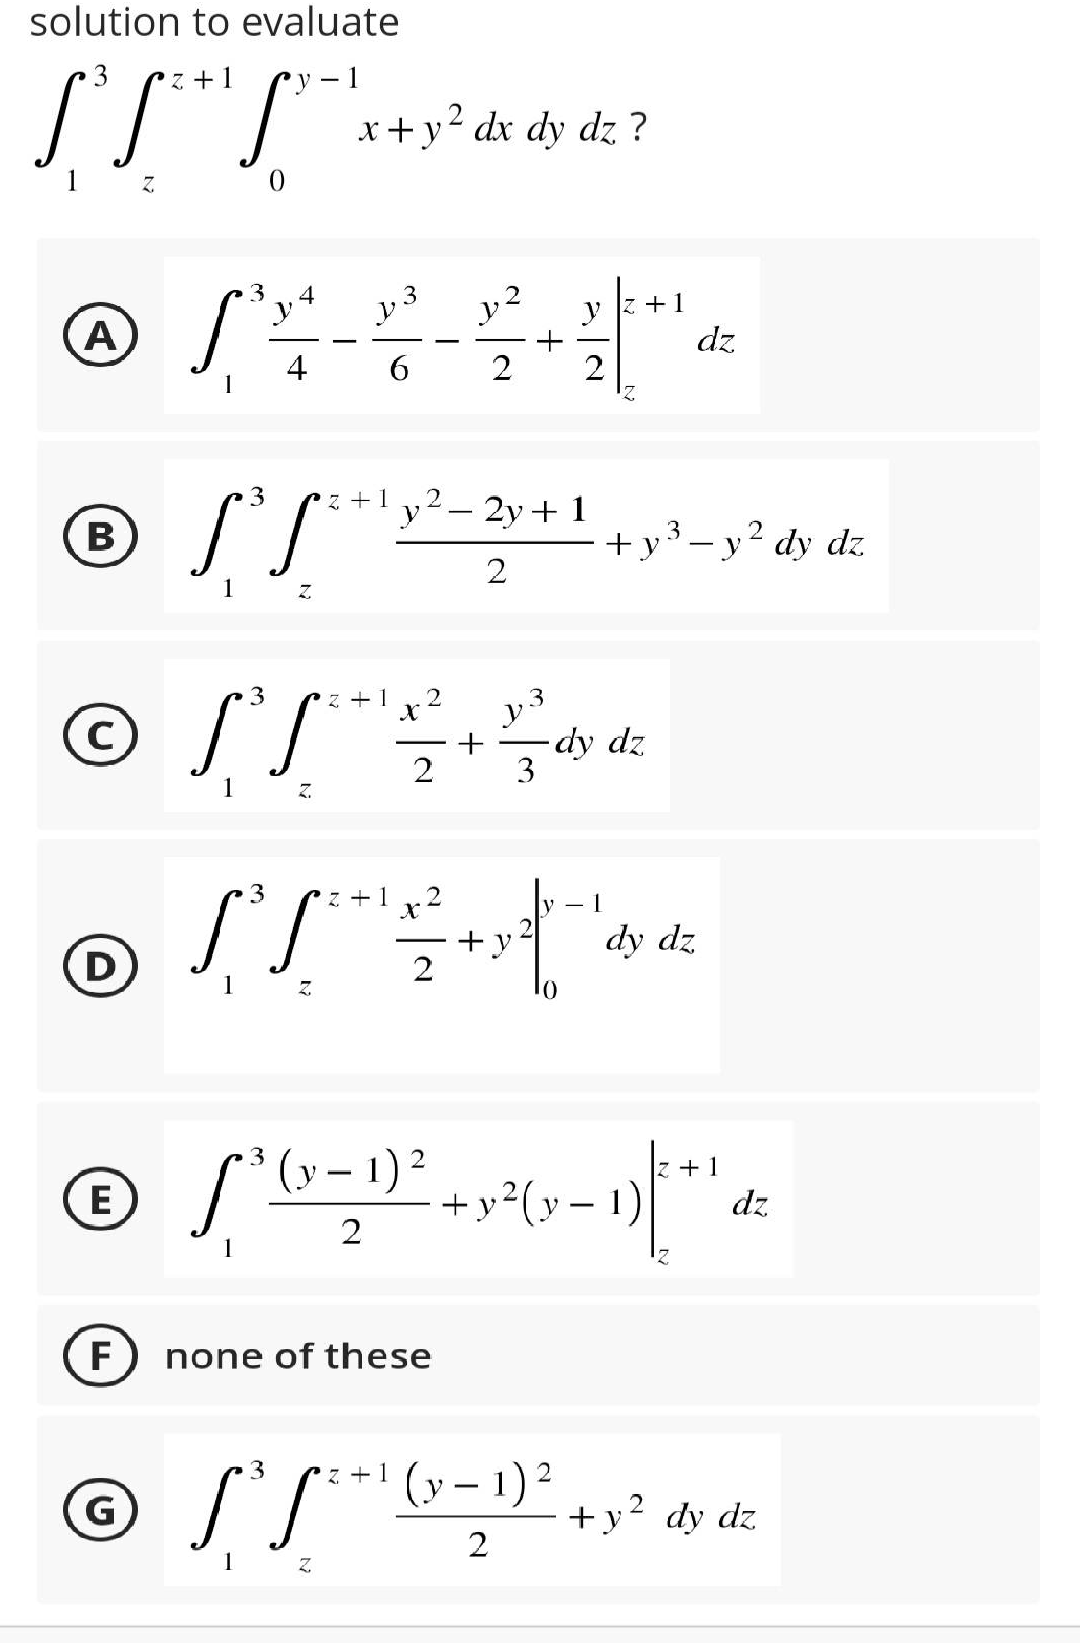 solution to evaluate
3
2+1
y-1
ГГГ x + y2 dx dy dz ?
Z
3
4
Ⓒ √ ²² - ² - ² + +
2+1
A
6
2
2
В
3
o fl
с
1
D
3
ГГ
1
Z
F
1
© оf
E
1
3
3
2+1 2
X
PLE+
2
1
z+1 y2- 2y + 1
2
3
2 + 1
X
2
2
2
(y-1) 2
2
none of these
у
3
2
3
+1
© ff**'(x-1)2
G
-dy dz
- 1
+y3 - y2 dy dz
+ y2(y - 1)
dy dz
dz
2 + 1
dz
+y2 dy dz